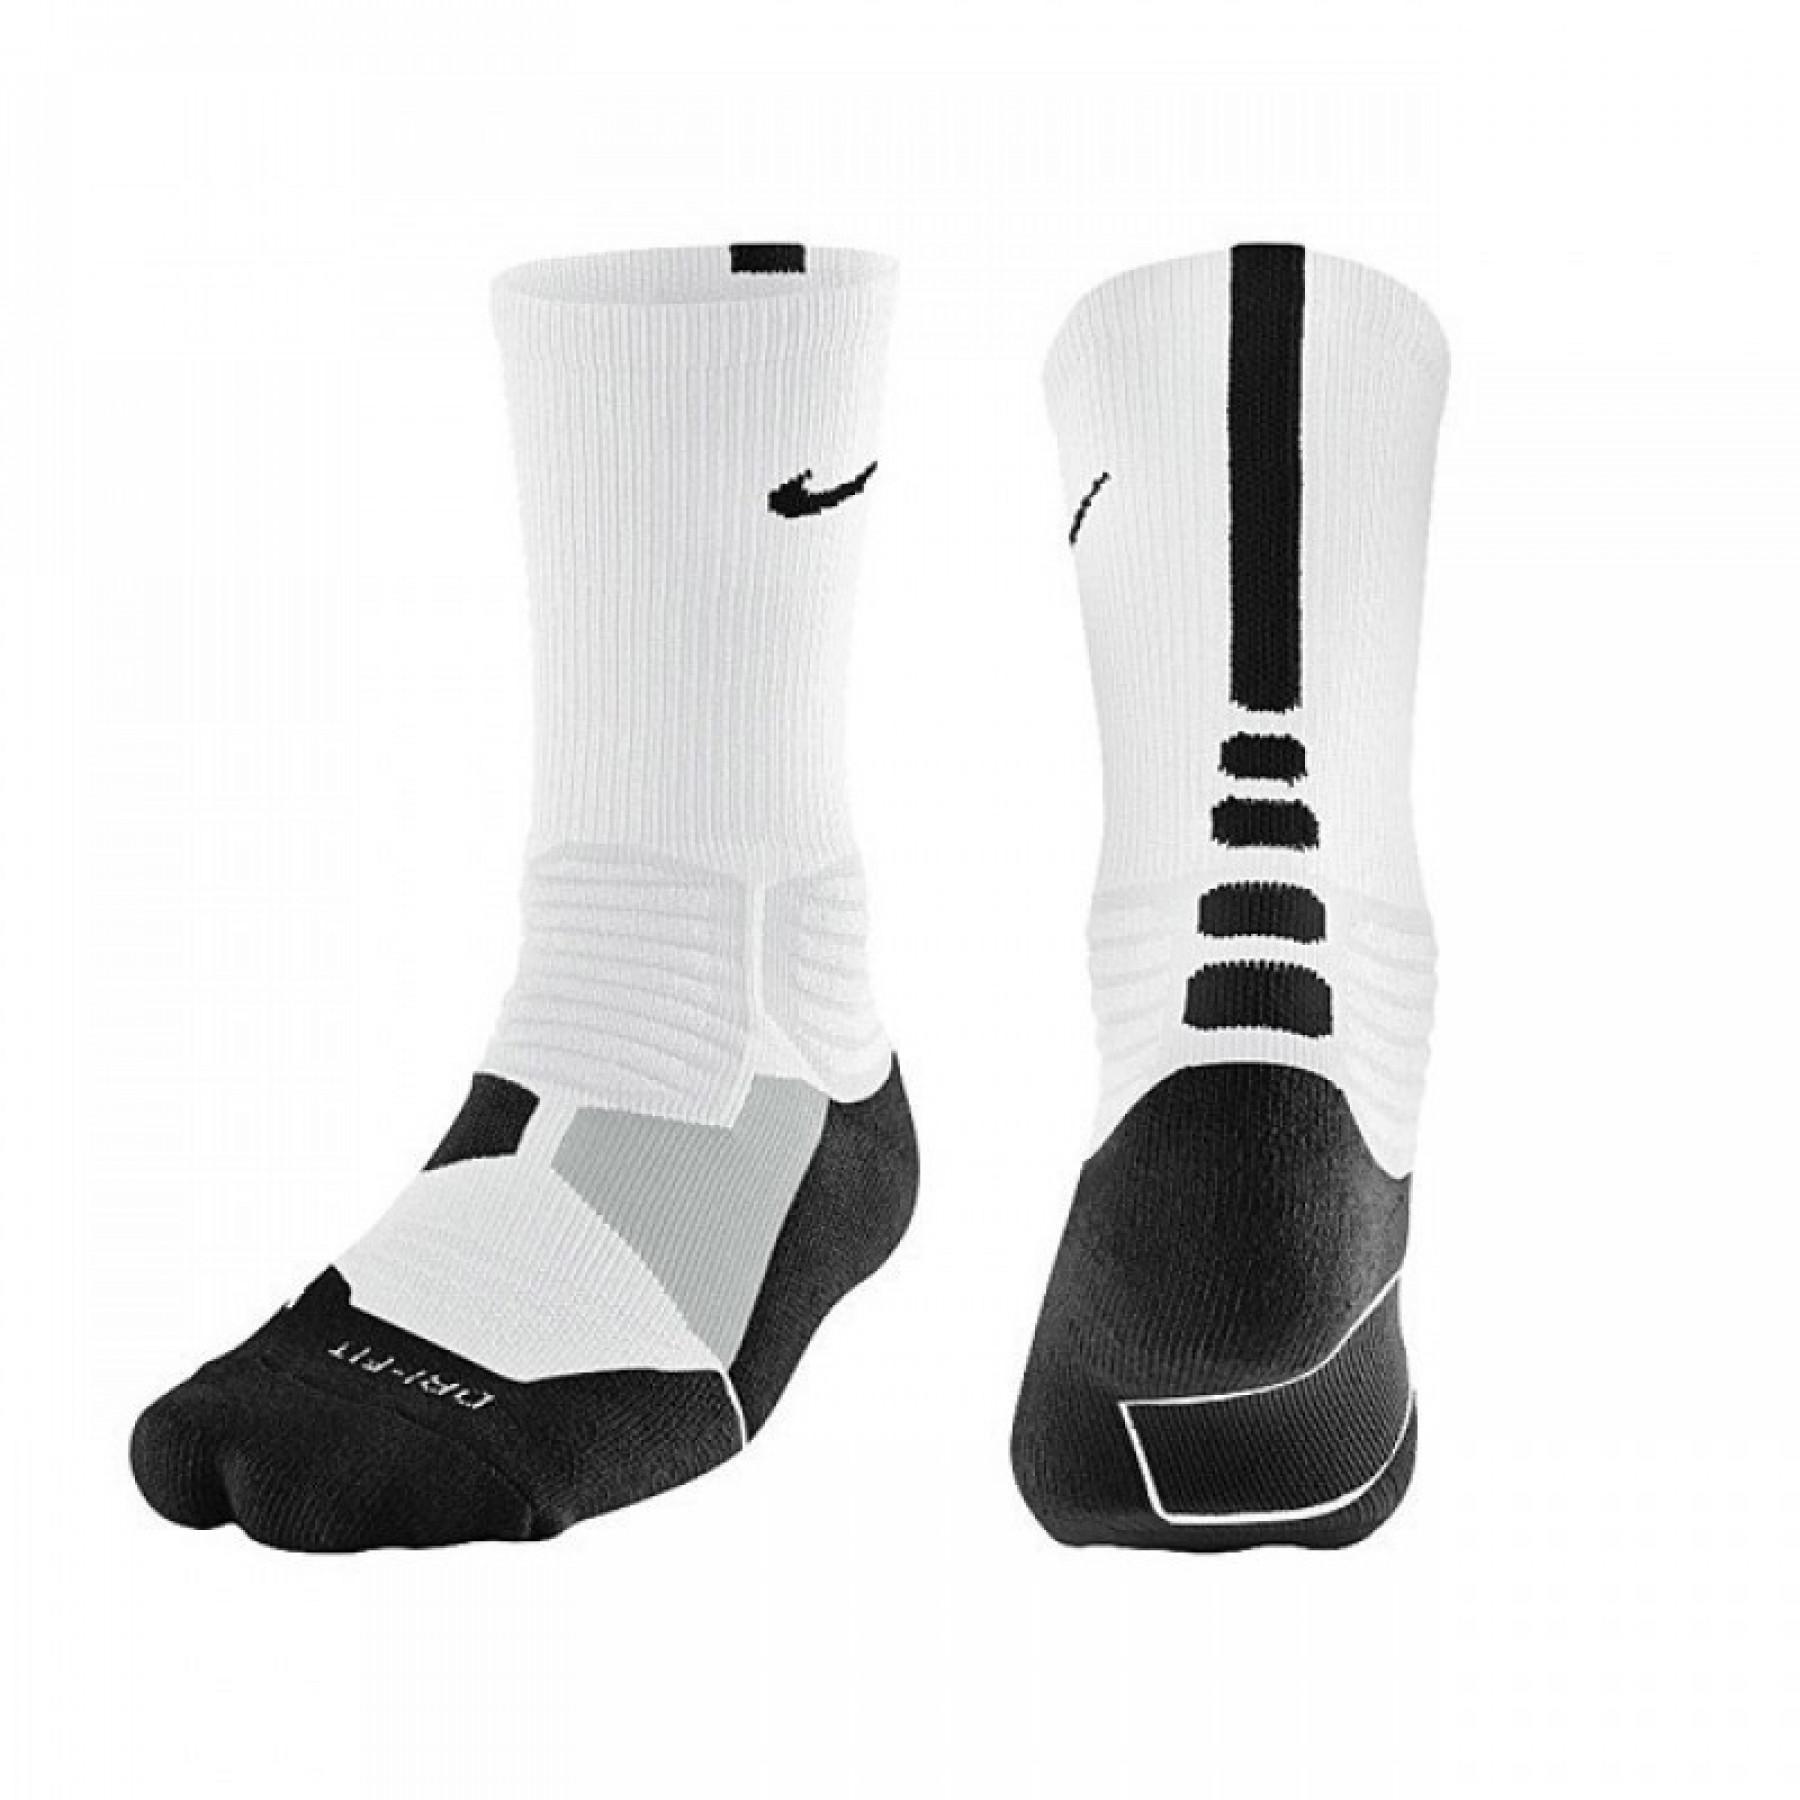 Set of 3 pairs of socks Nike HyperElite